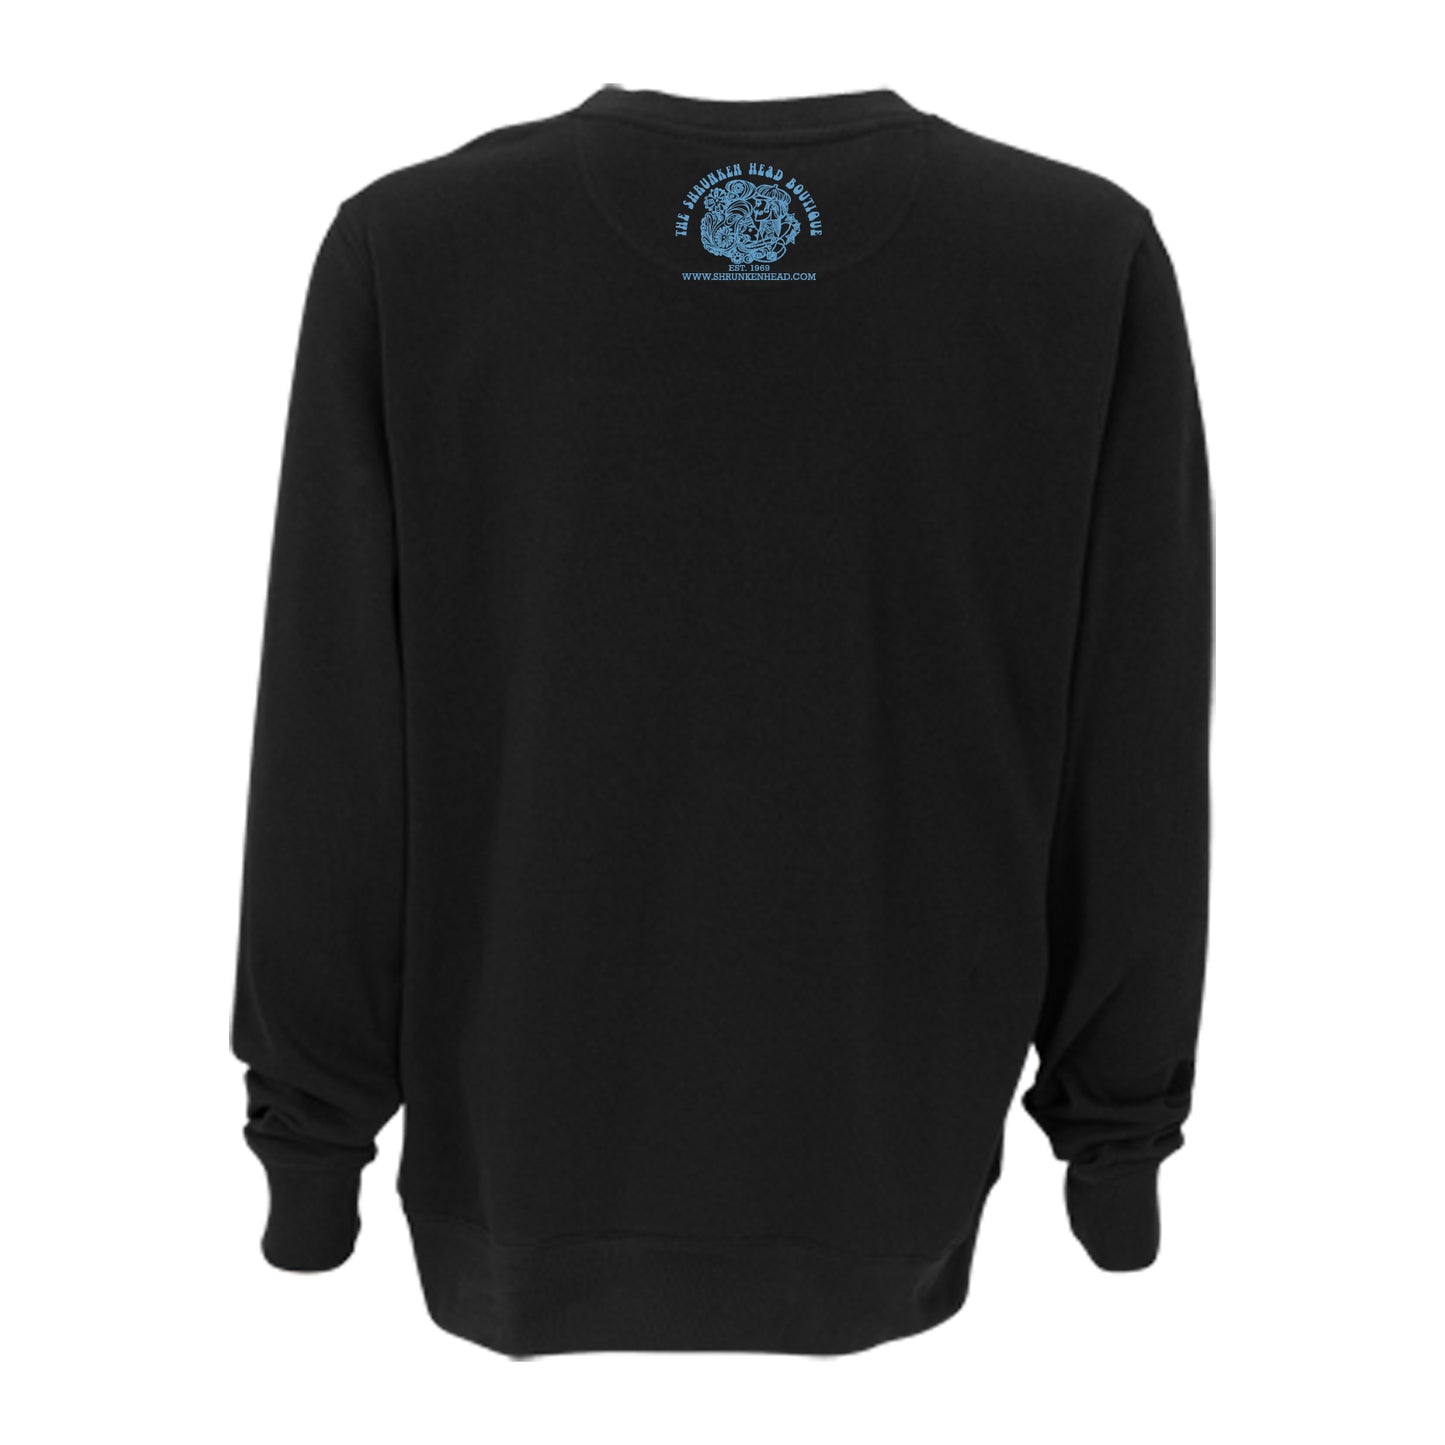 Chapel Hill NC Crewneck Sweatshirt in Black with Rock Font